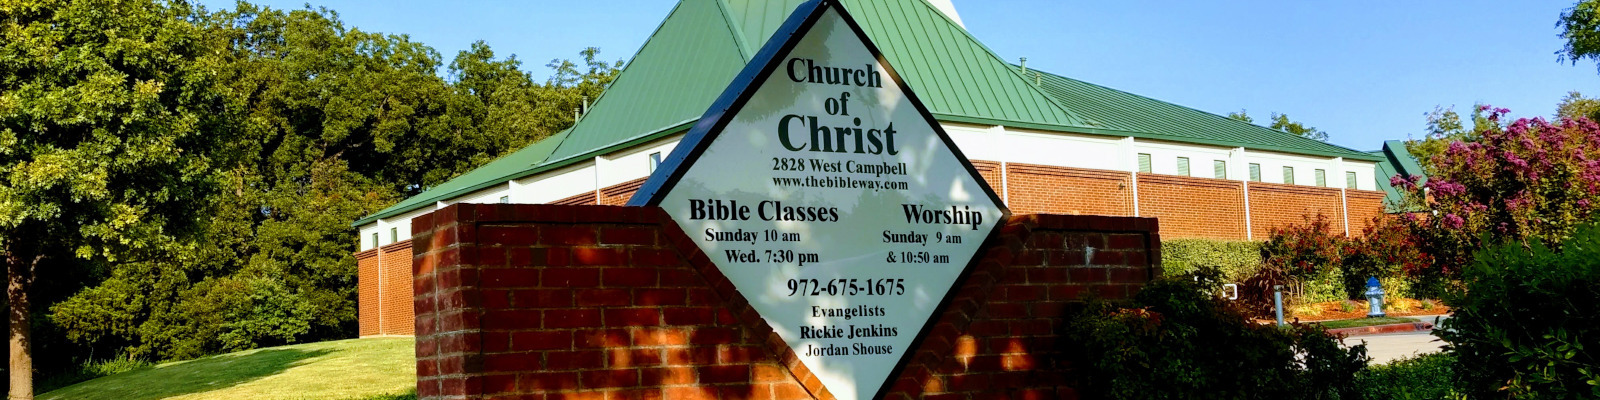 Sermons: Campbell Road Church of Christ